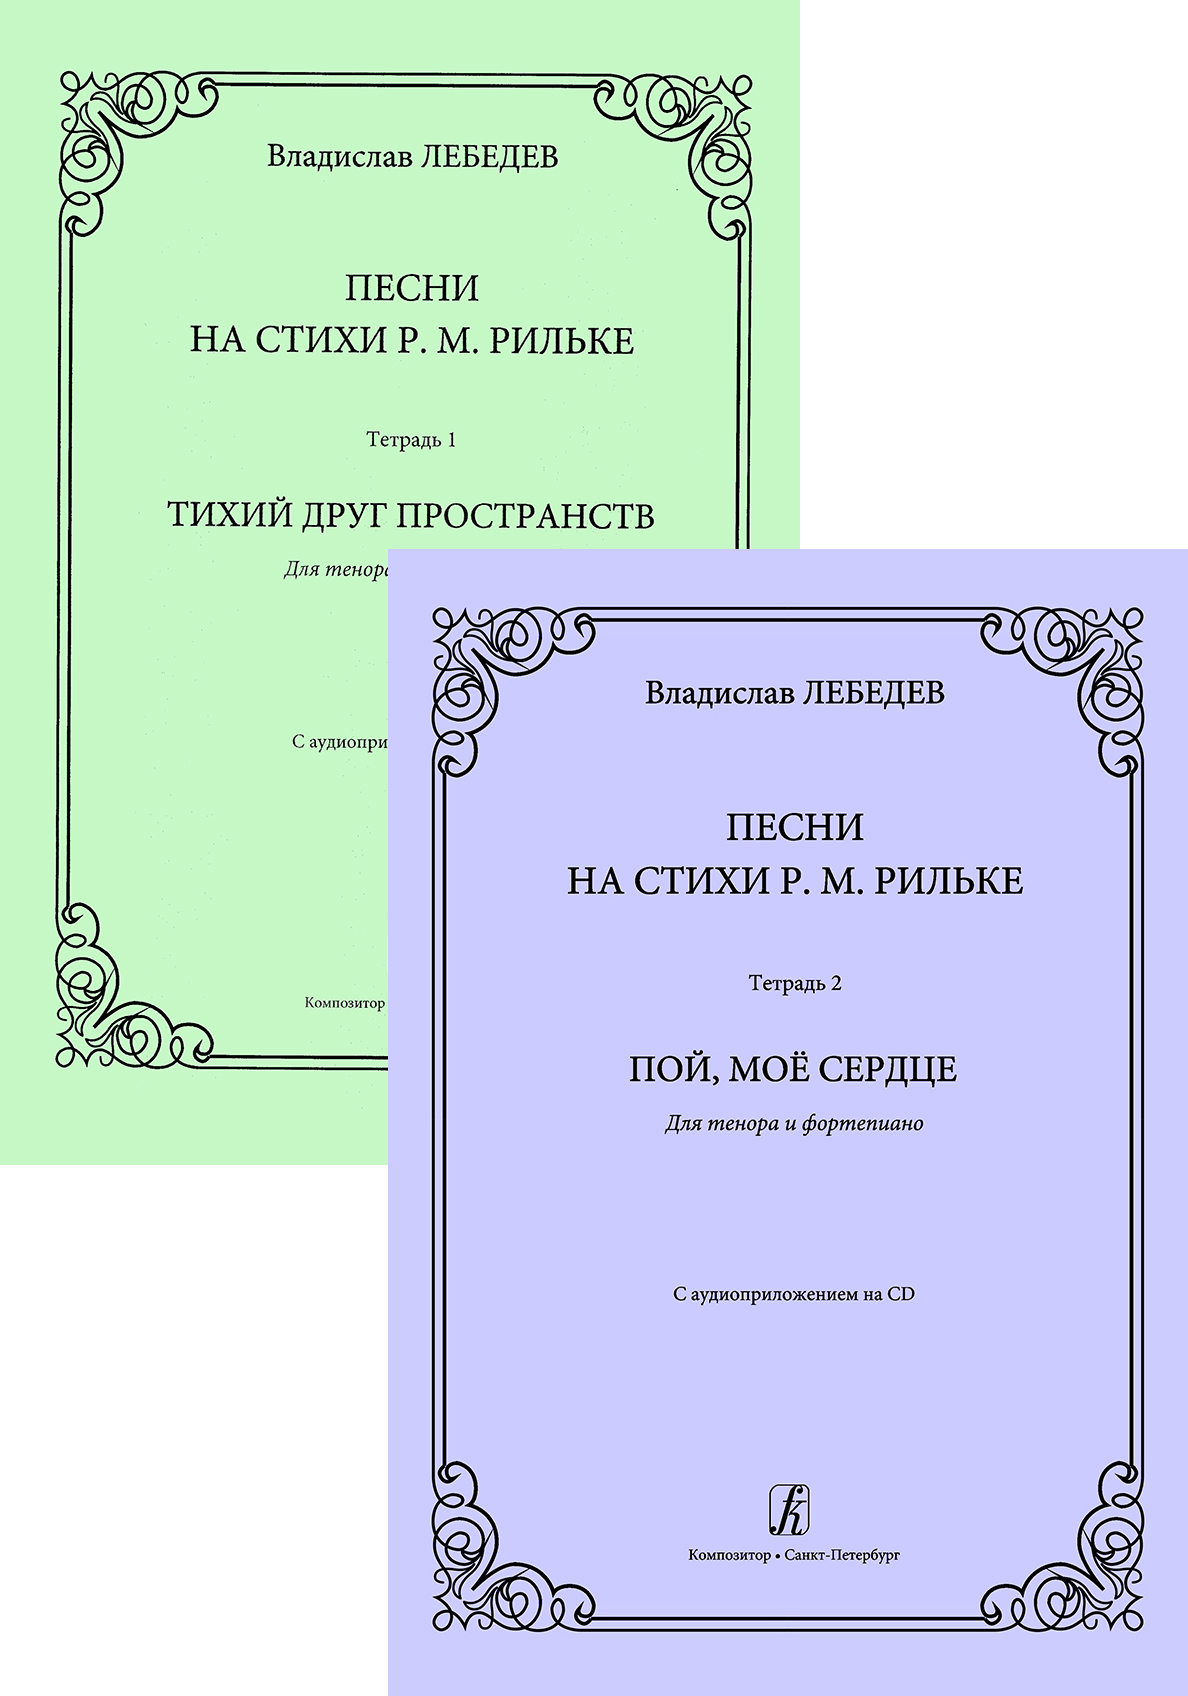 Lebedev V. Songs to R. Rilke's Verses. Vol. 1&Vol. 2. For tenor and piano (+CD)